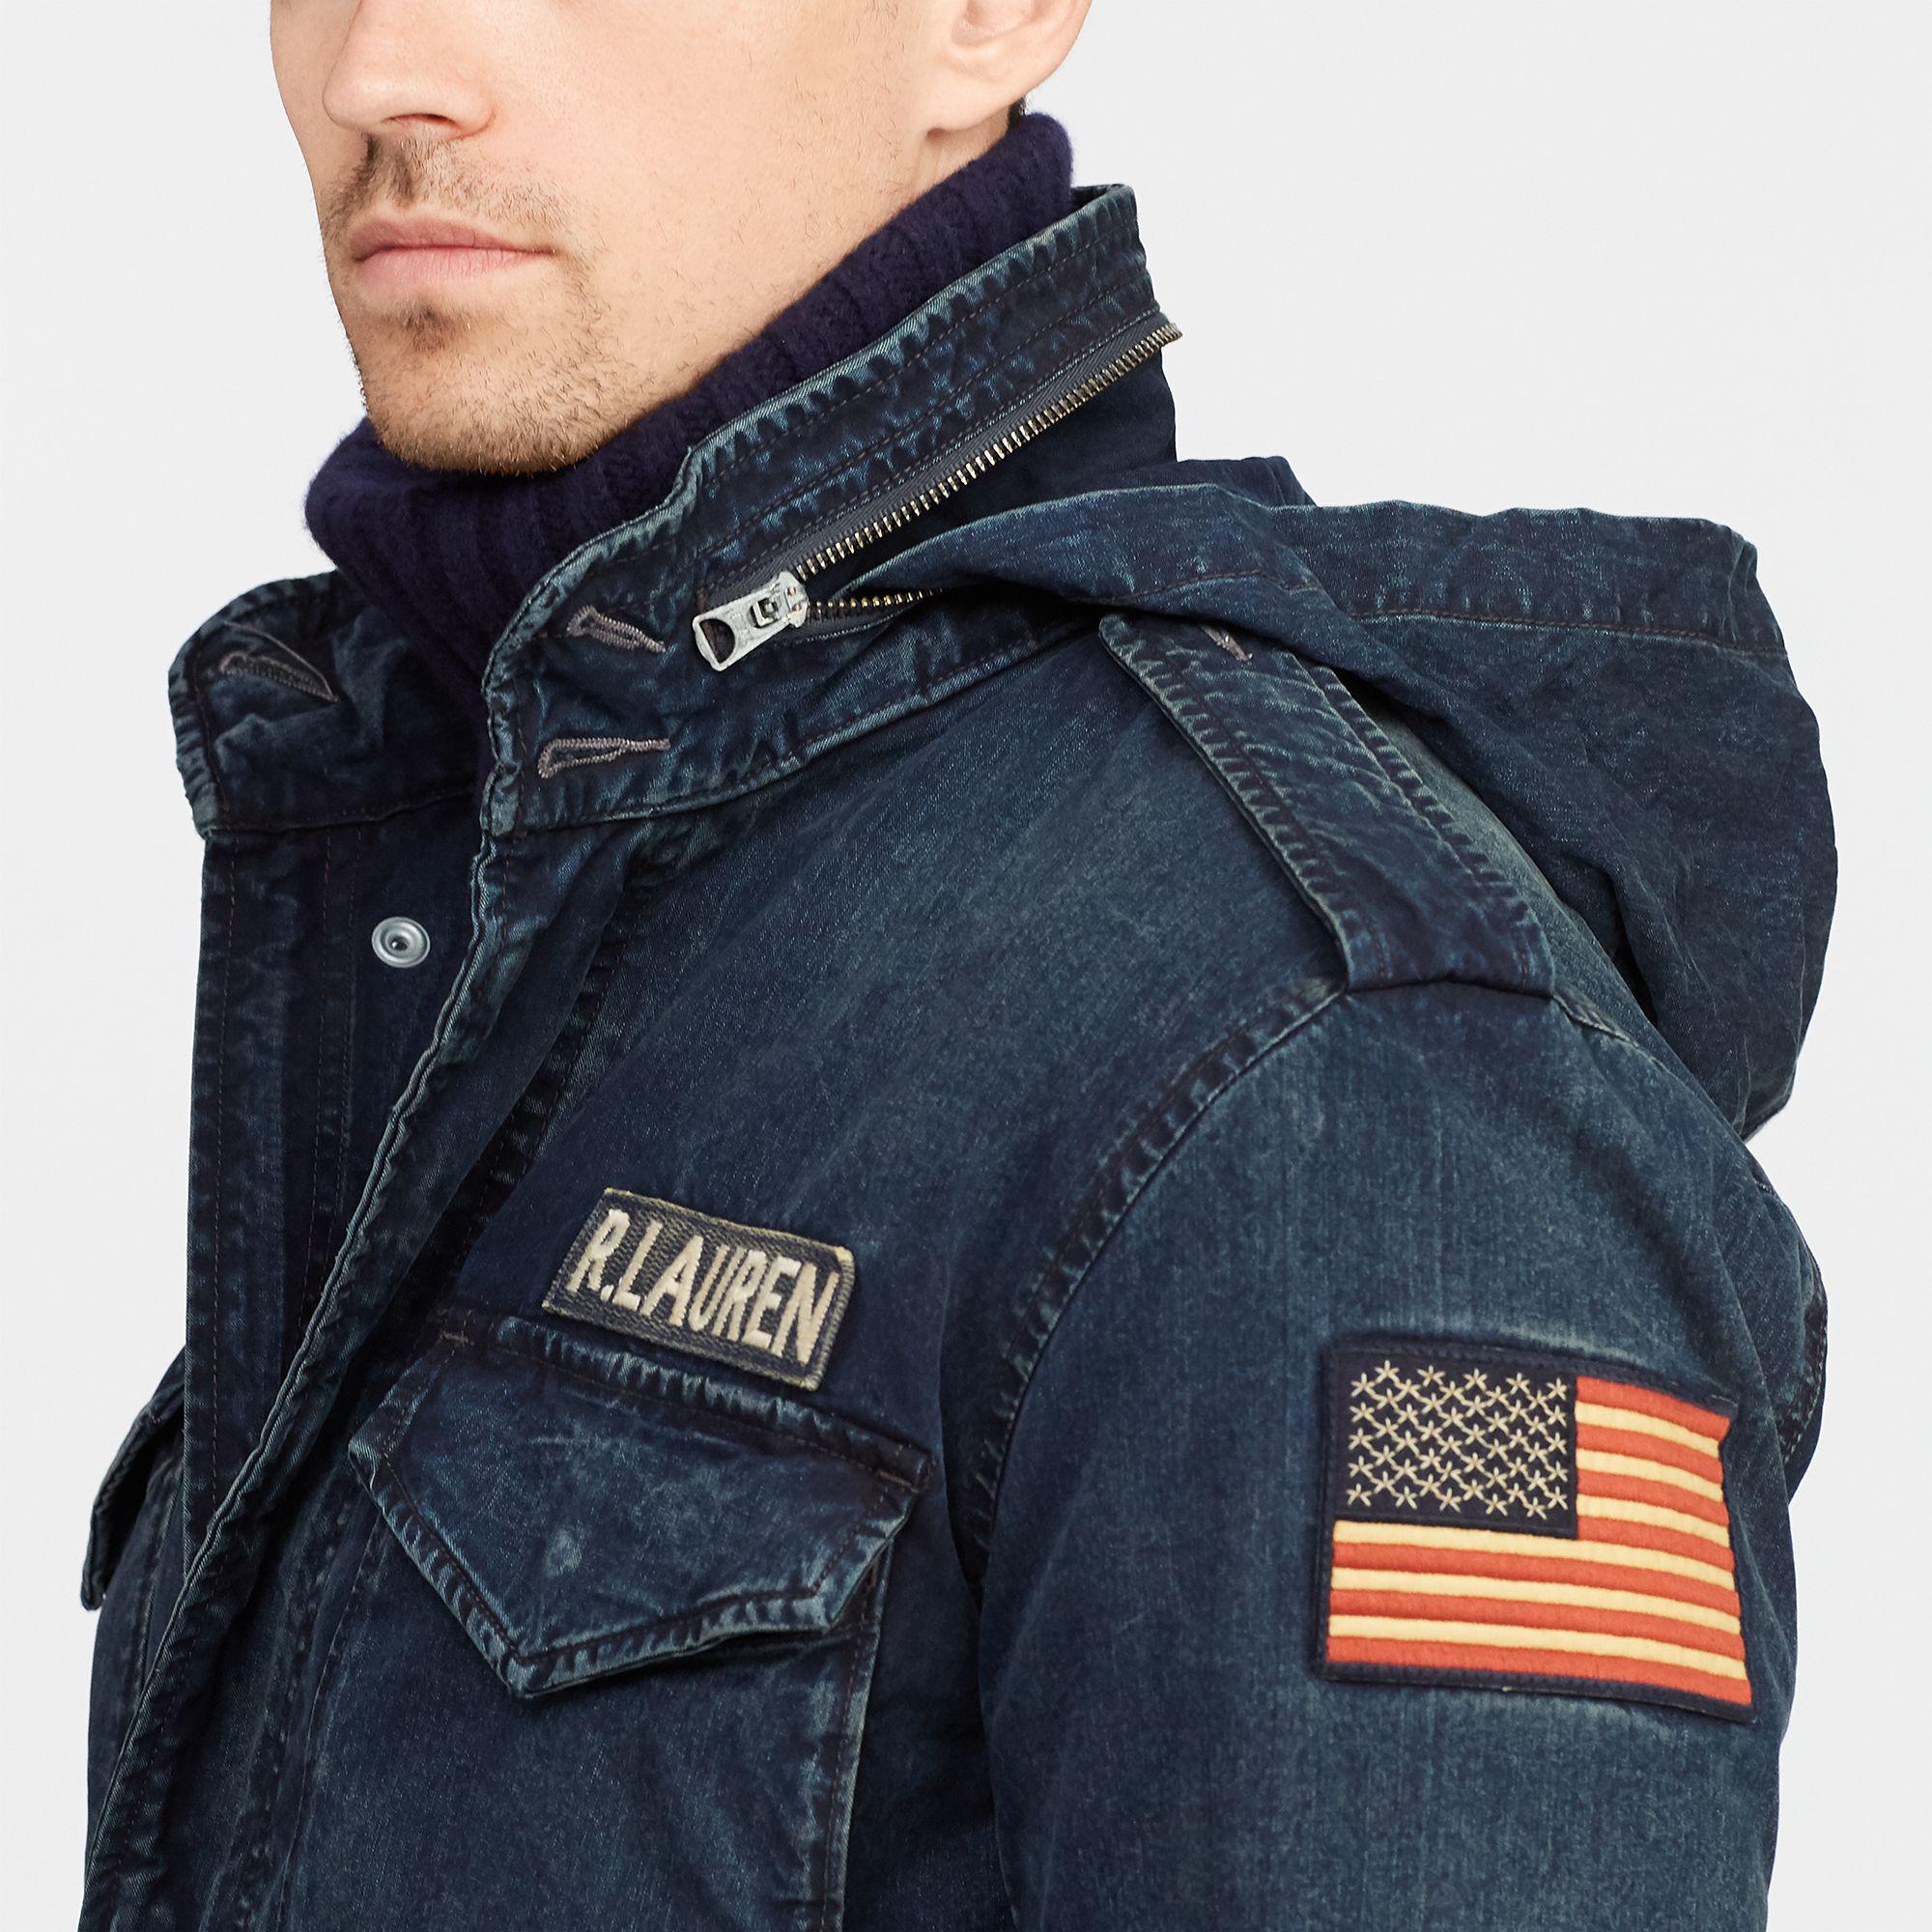 Polo Ralph Lauren Denim Field Jacket in Navy/Cream (Blue) for Men - Lyst